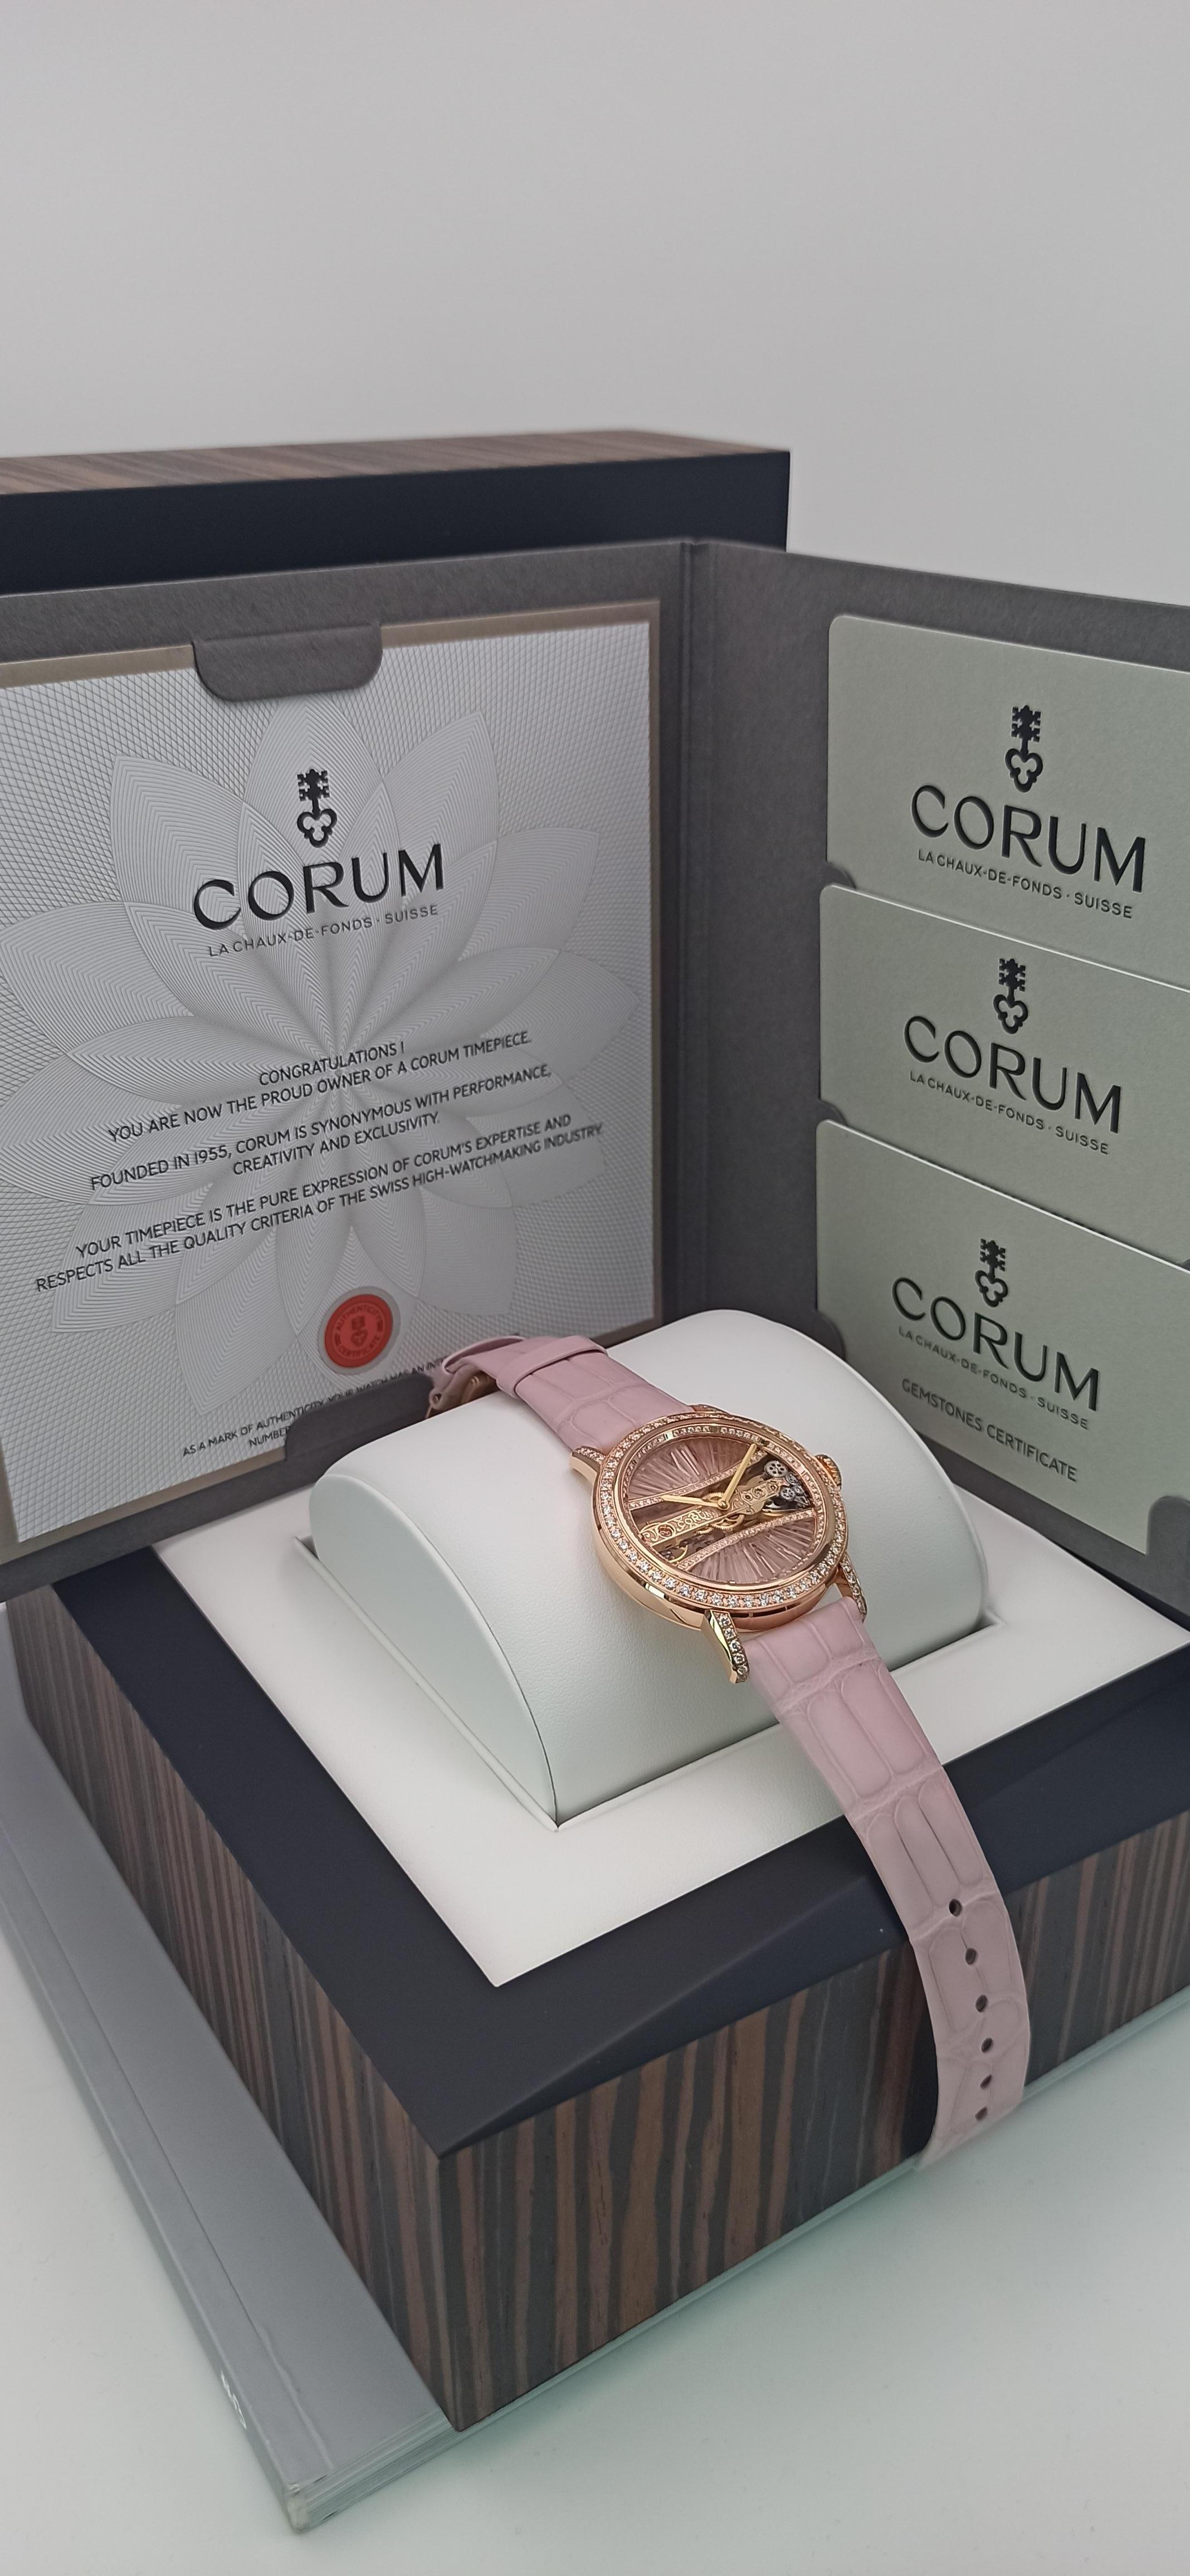 Brilliant Cut Corum Golden Bridge Round Lady, 18k Rose Gold, Diamonds Case For Sale